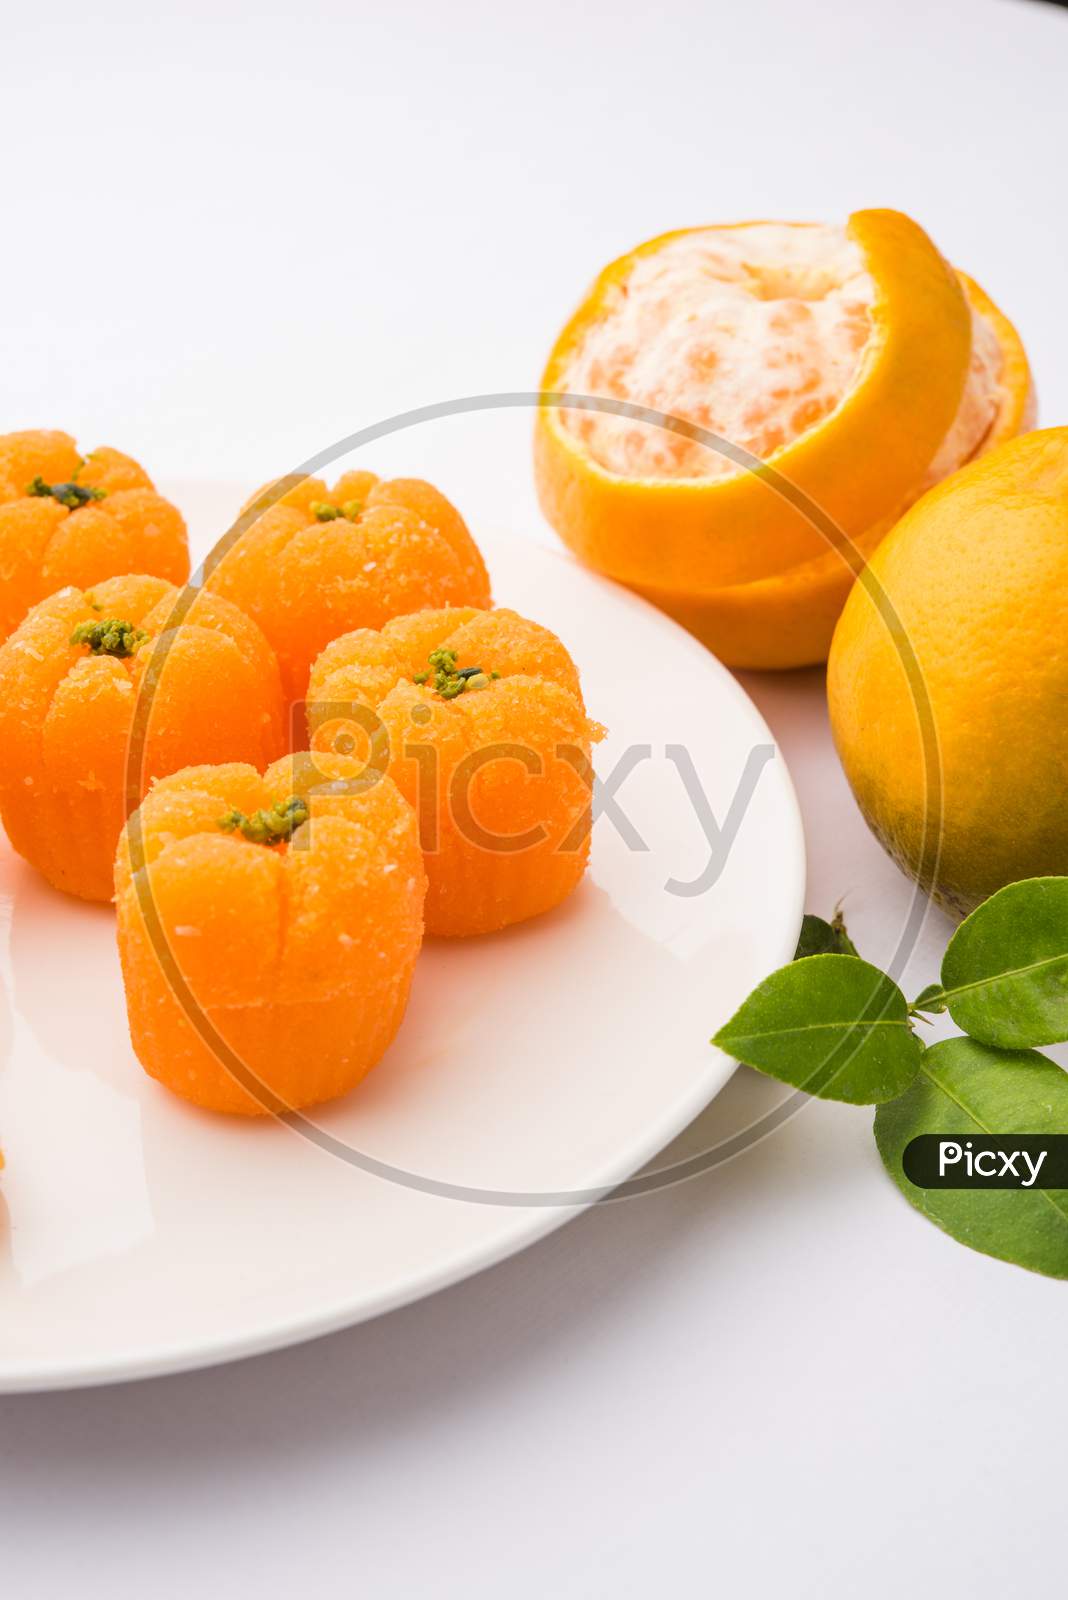 Orange / Santra Barfi